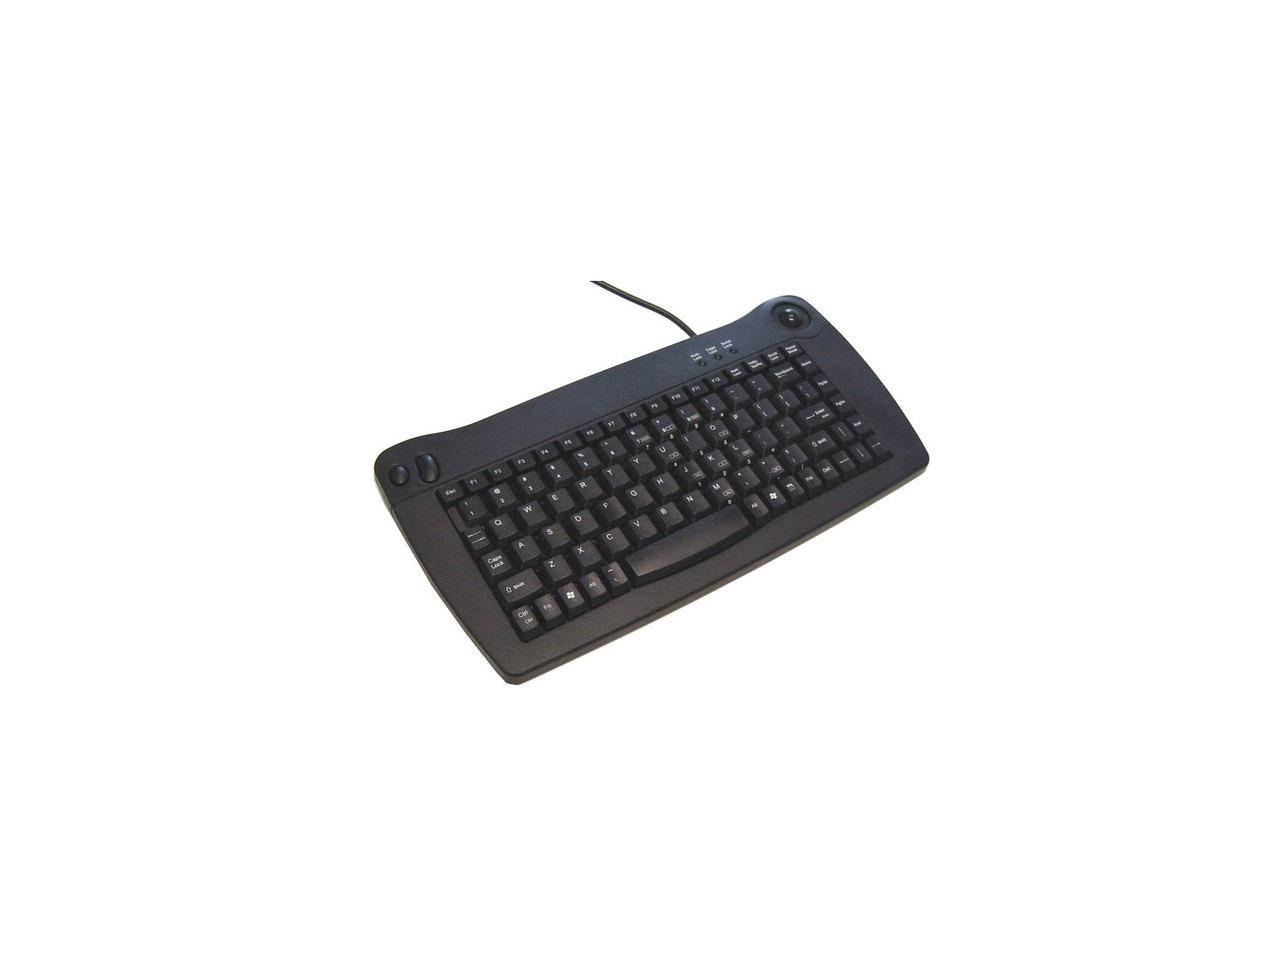 Mini Usb Keyboard With Trackball (Black) - ACK-5010UB